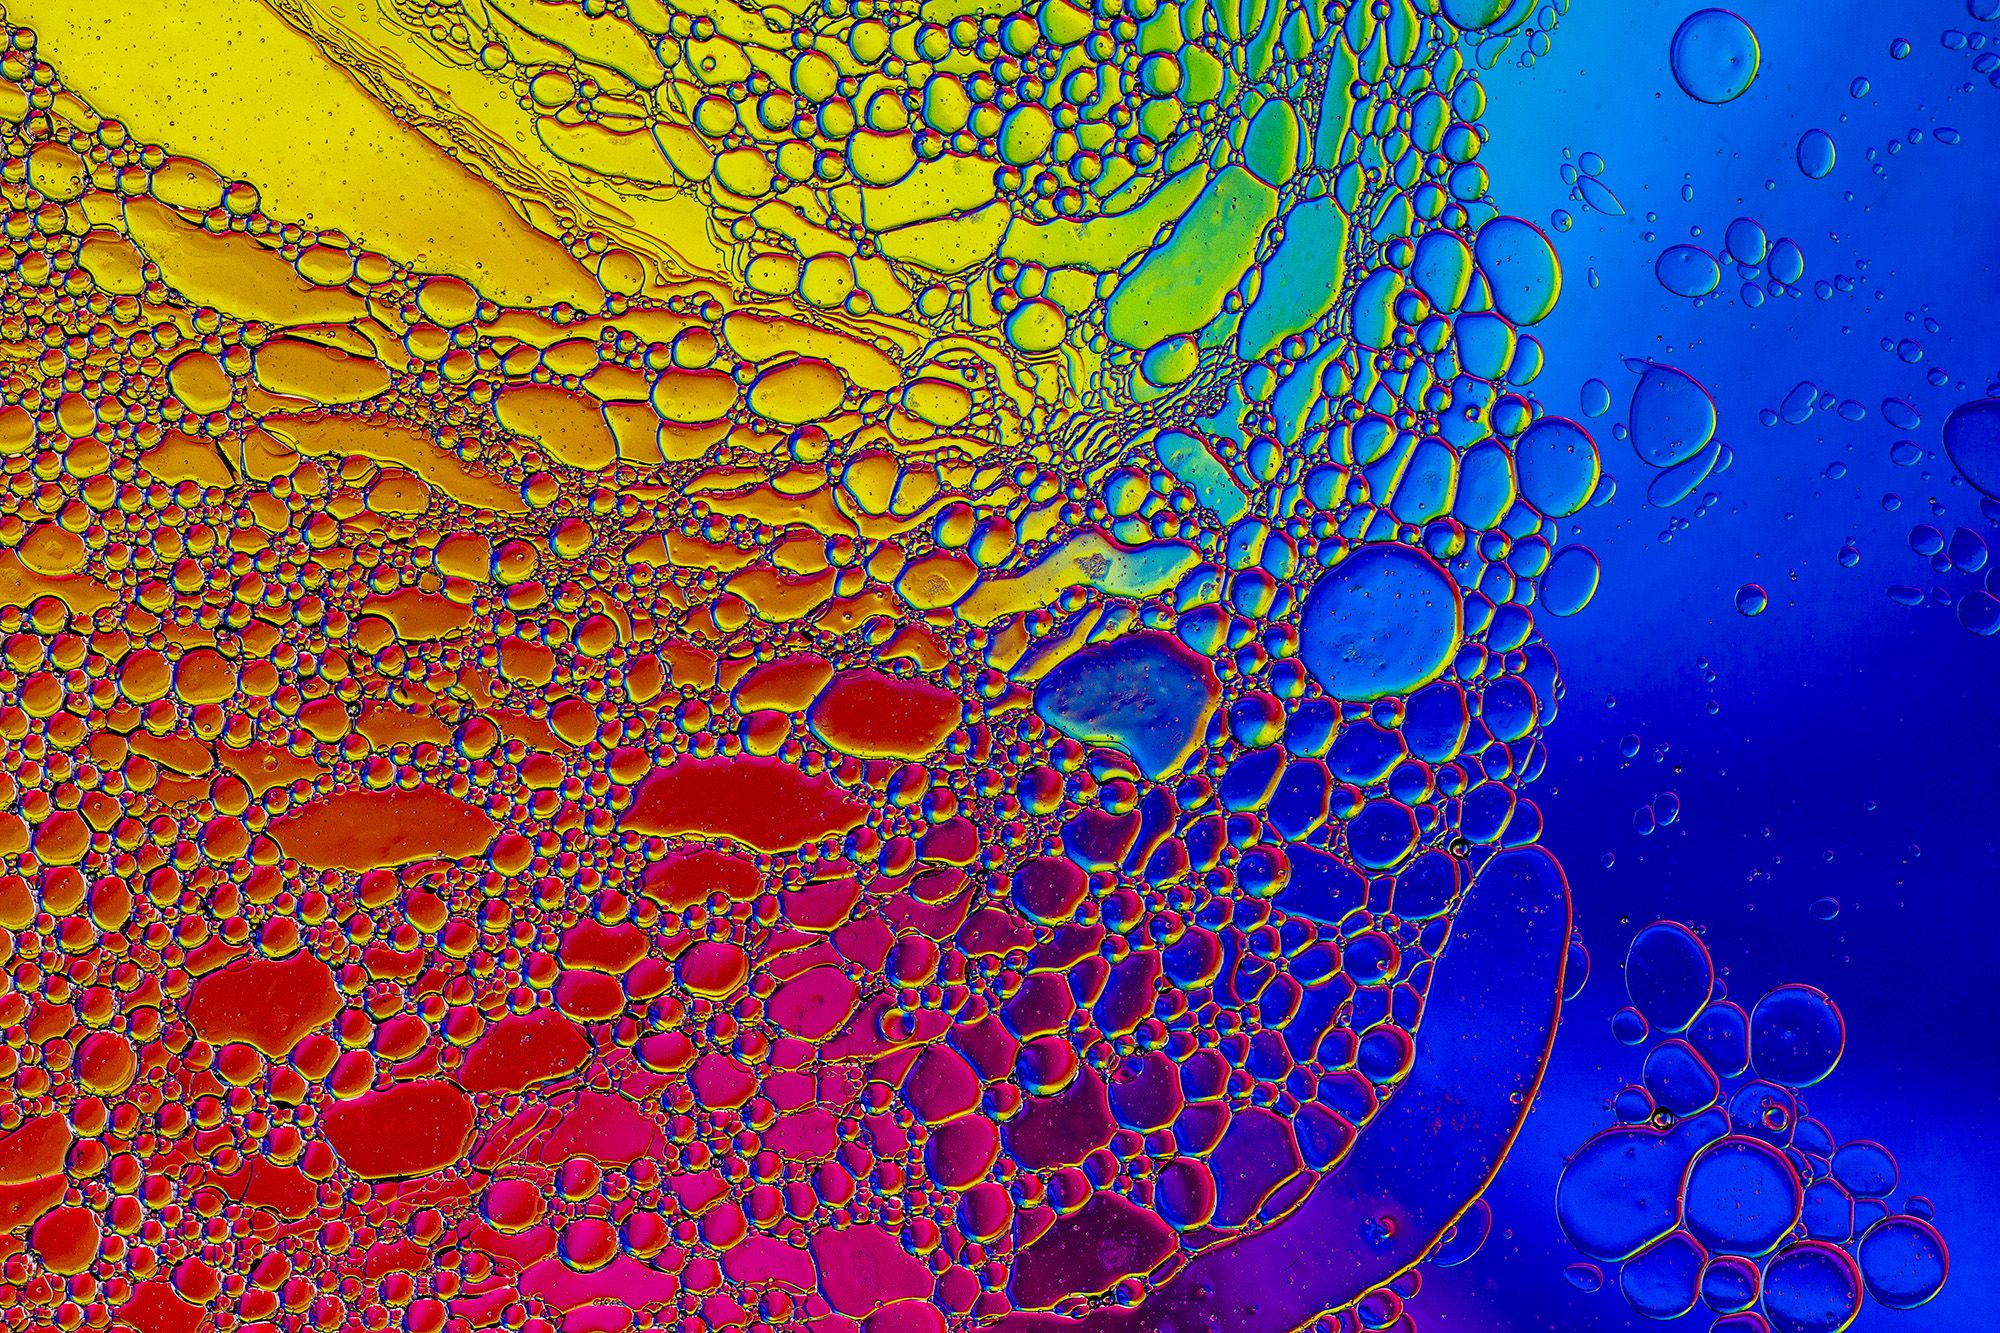 Oil in water bubbles | Paul Kahlert Photography | Pinterest ...